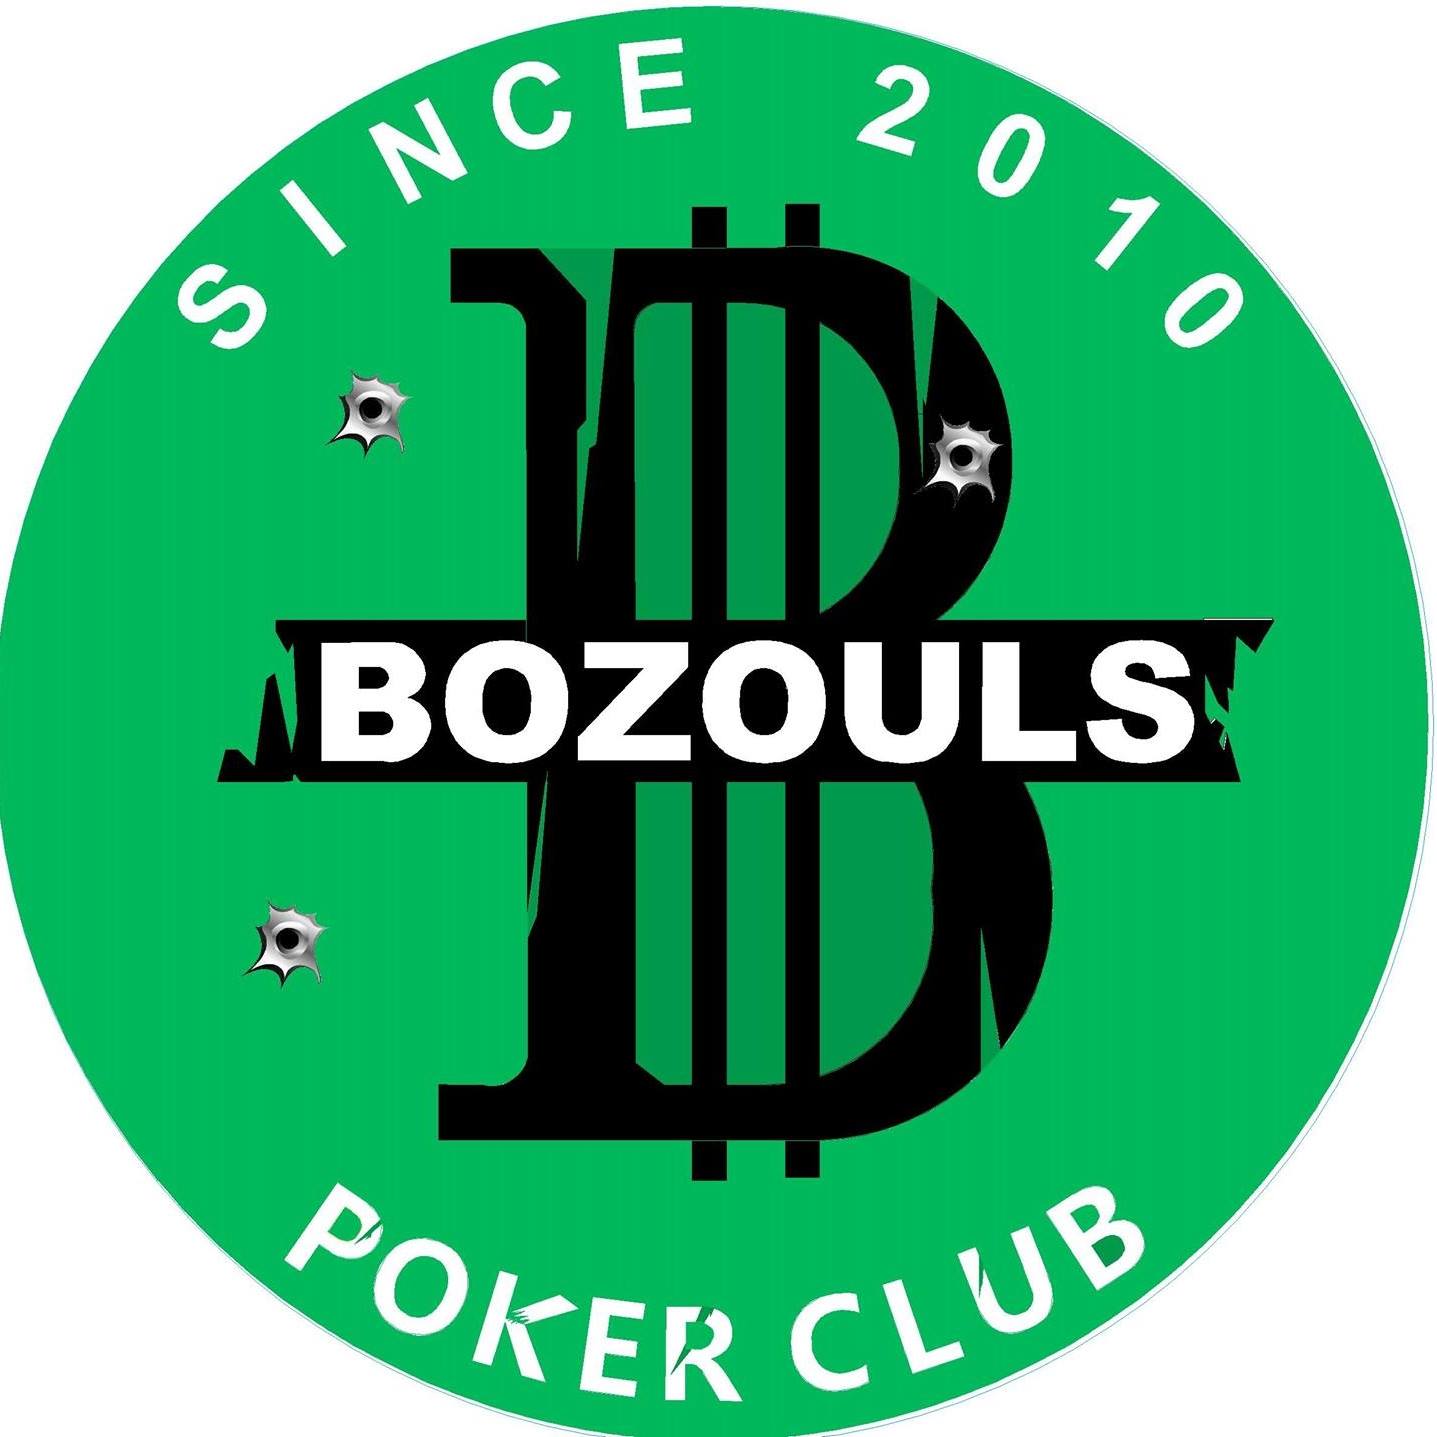 BOZOULS POKER CLUB